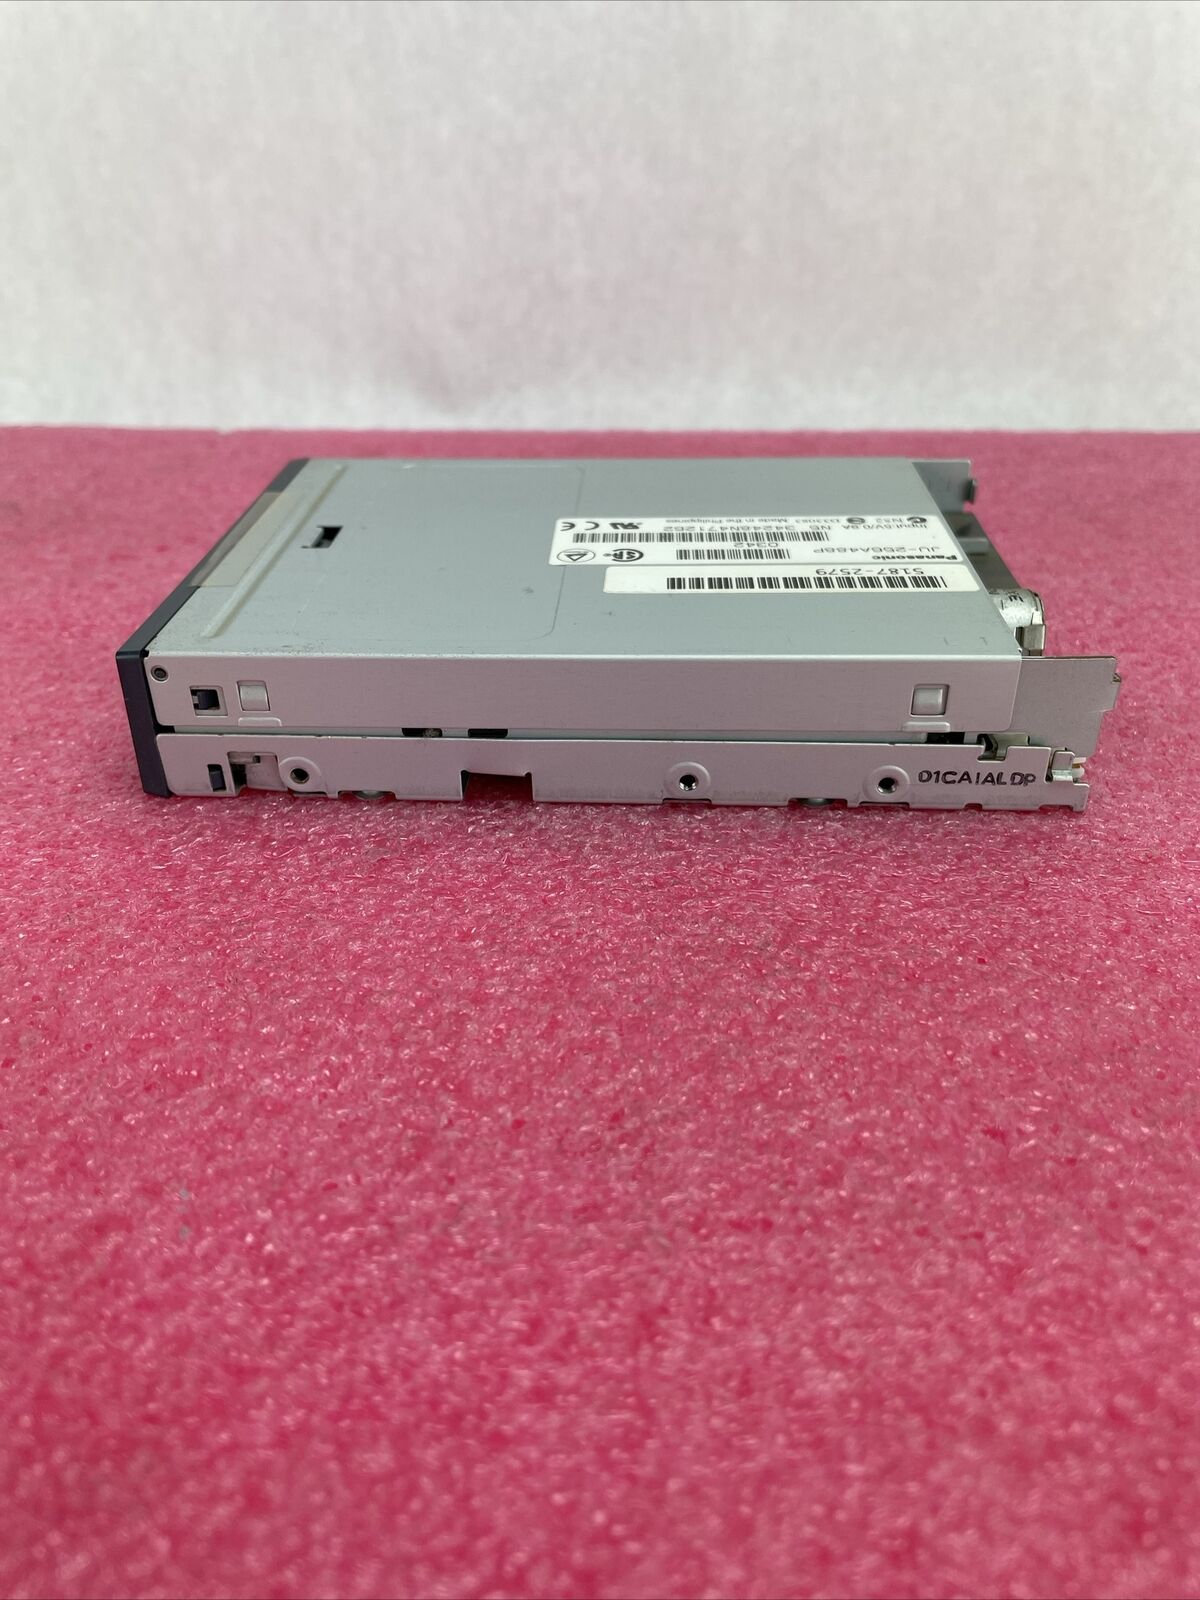 Panasonic JU-256A216P 3.5" 1.44MB Internal Floppy Disk Drive